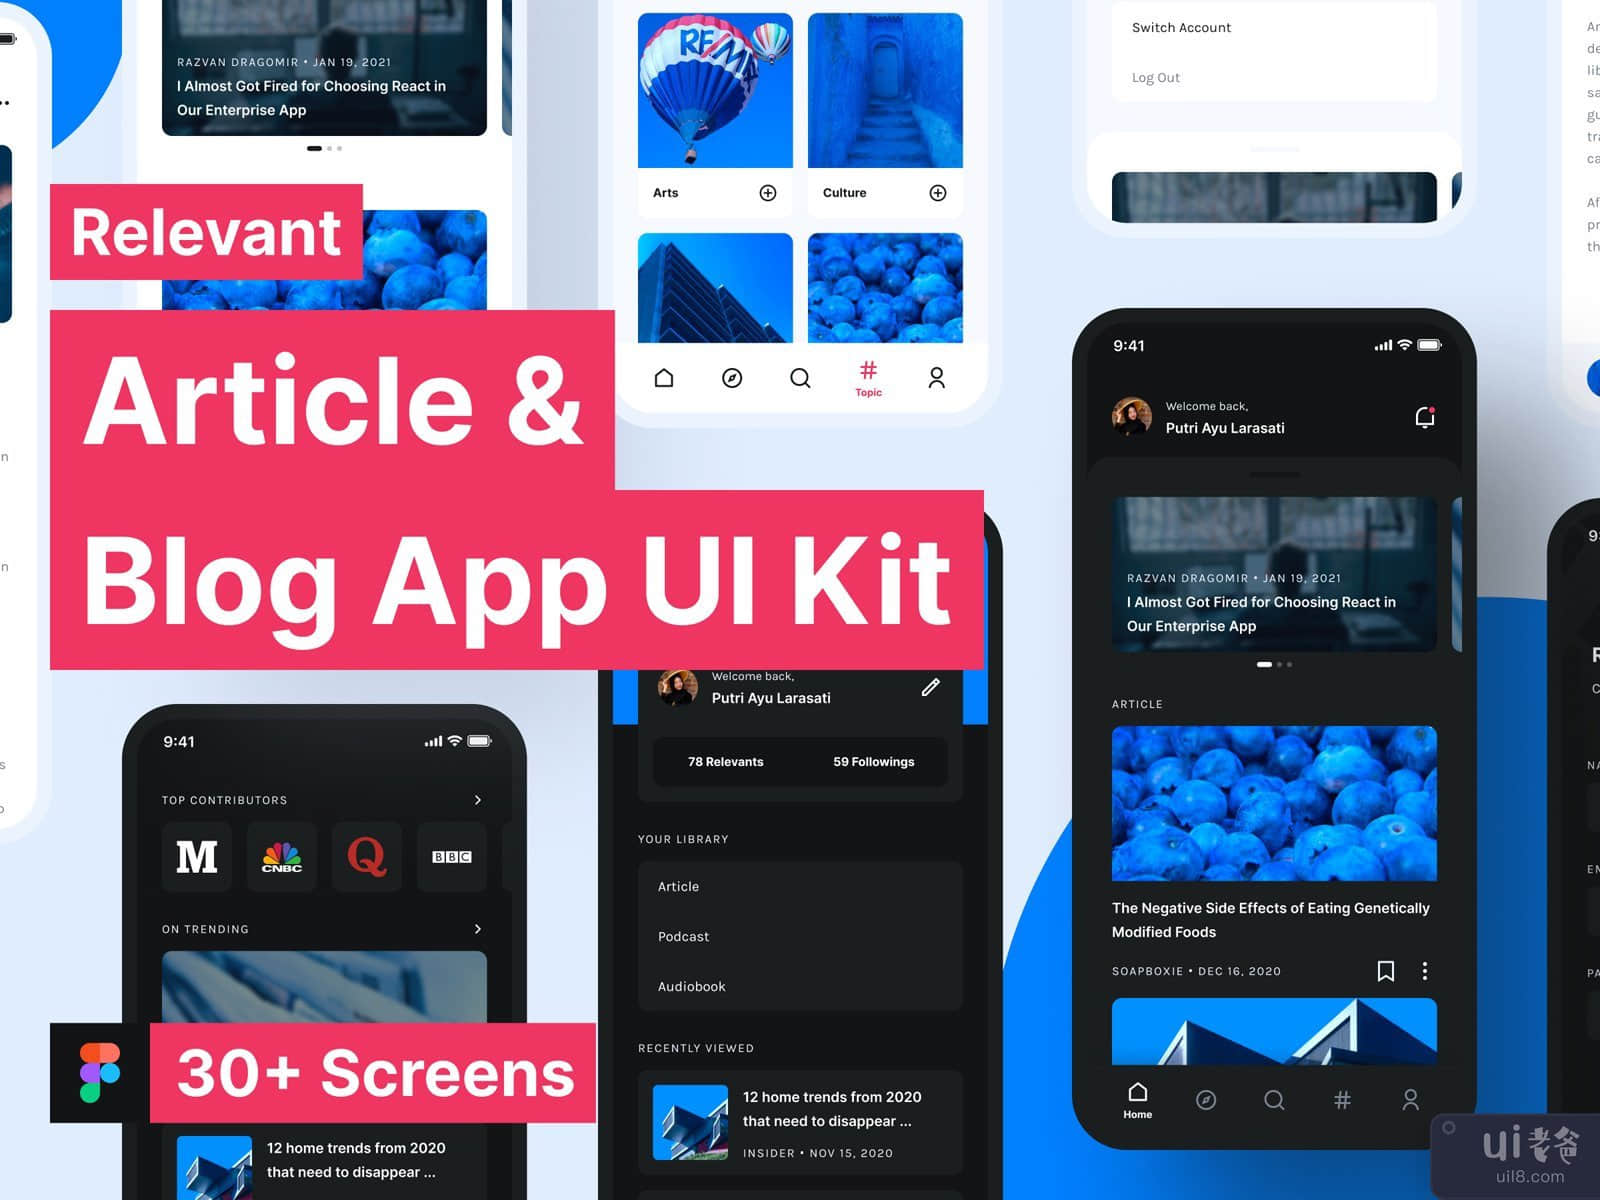 Relevant - Article & Blog App UI Kit